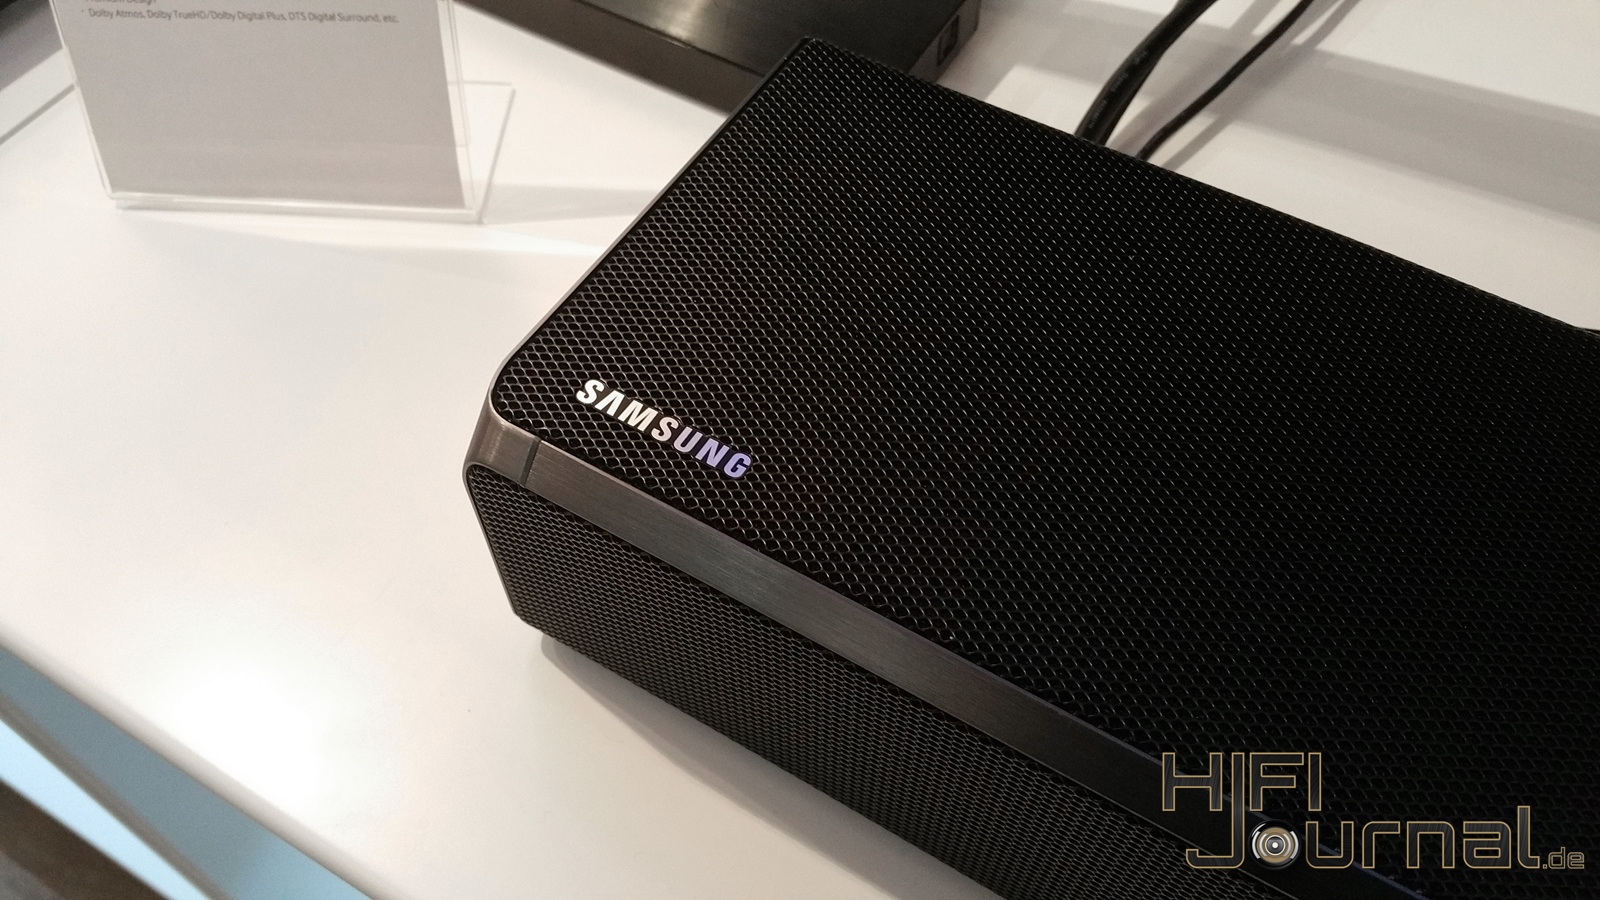 Samsung HW K950 Dolby Atmos Soundbar 3